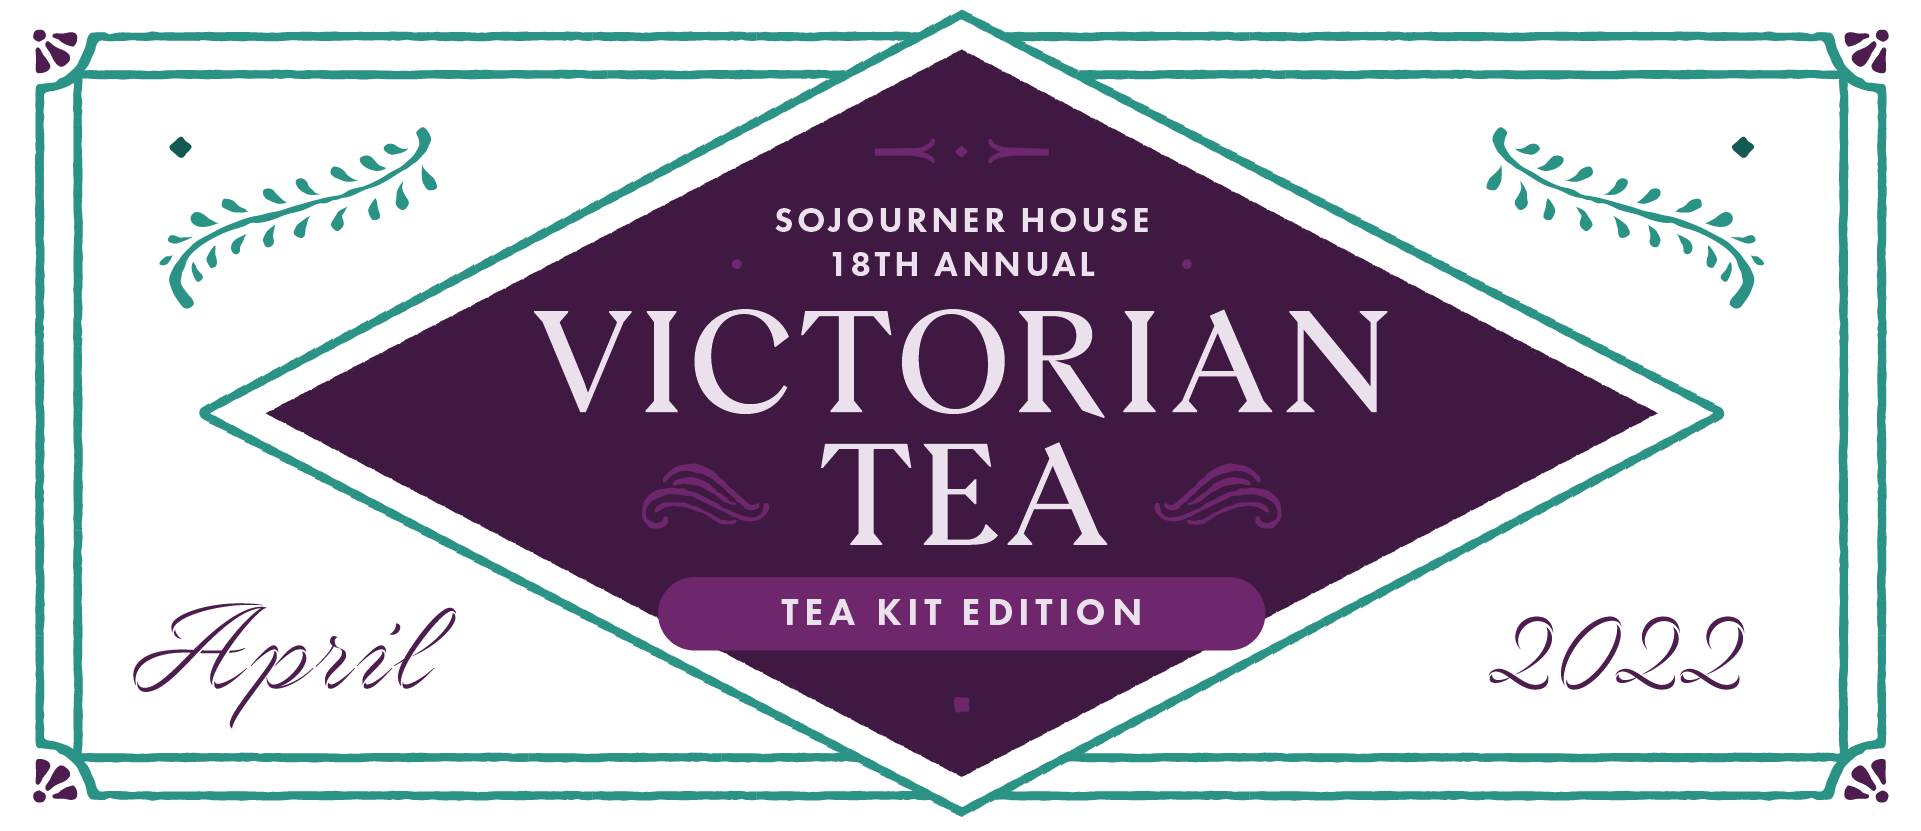 Victorian Tea graphic 2022